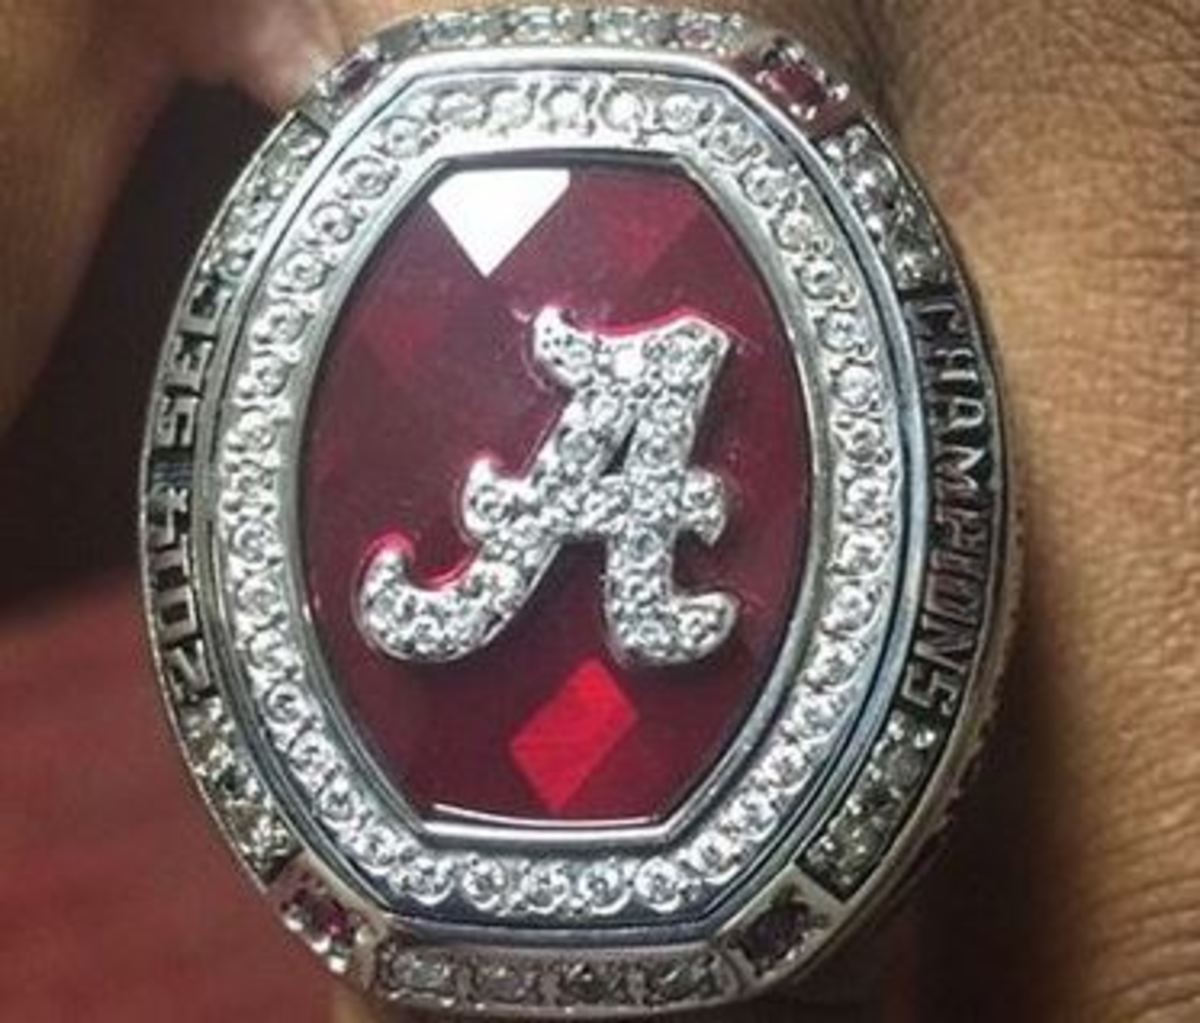 Photos Alabama has received their SEC Championship rings FootballScoop